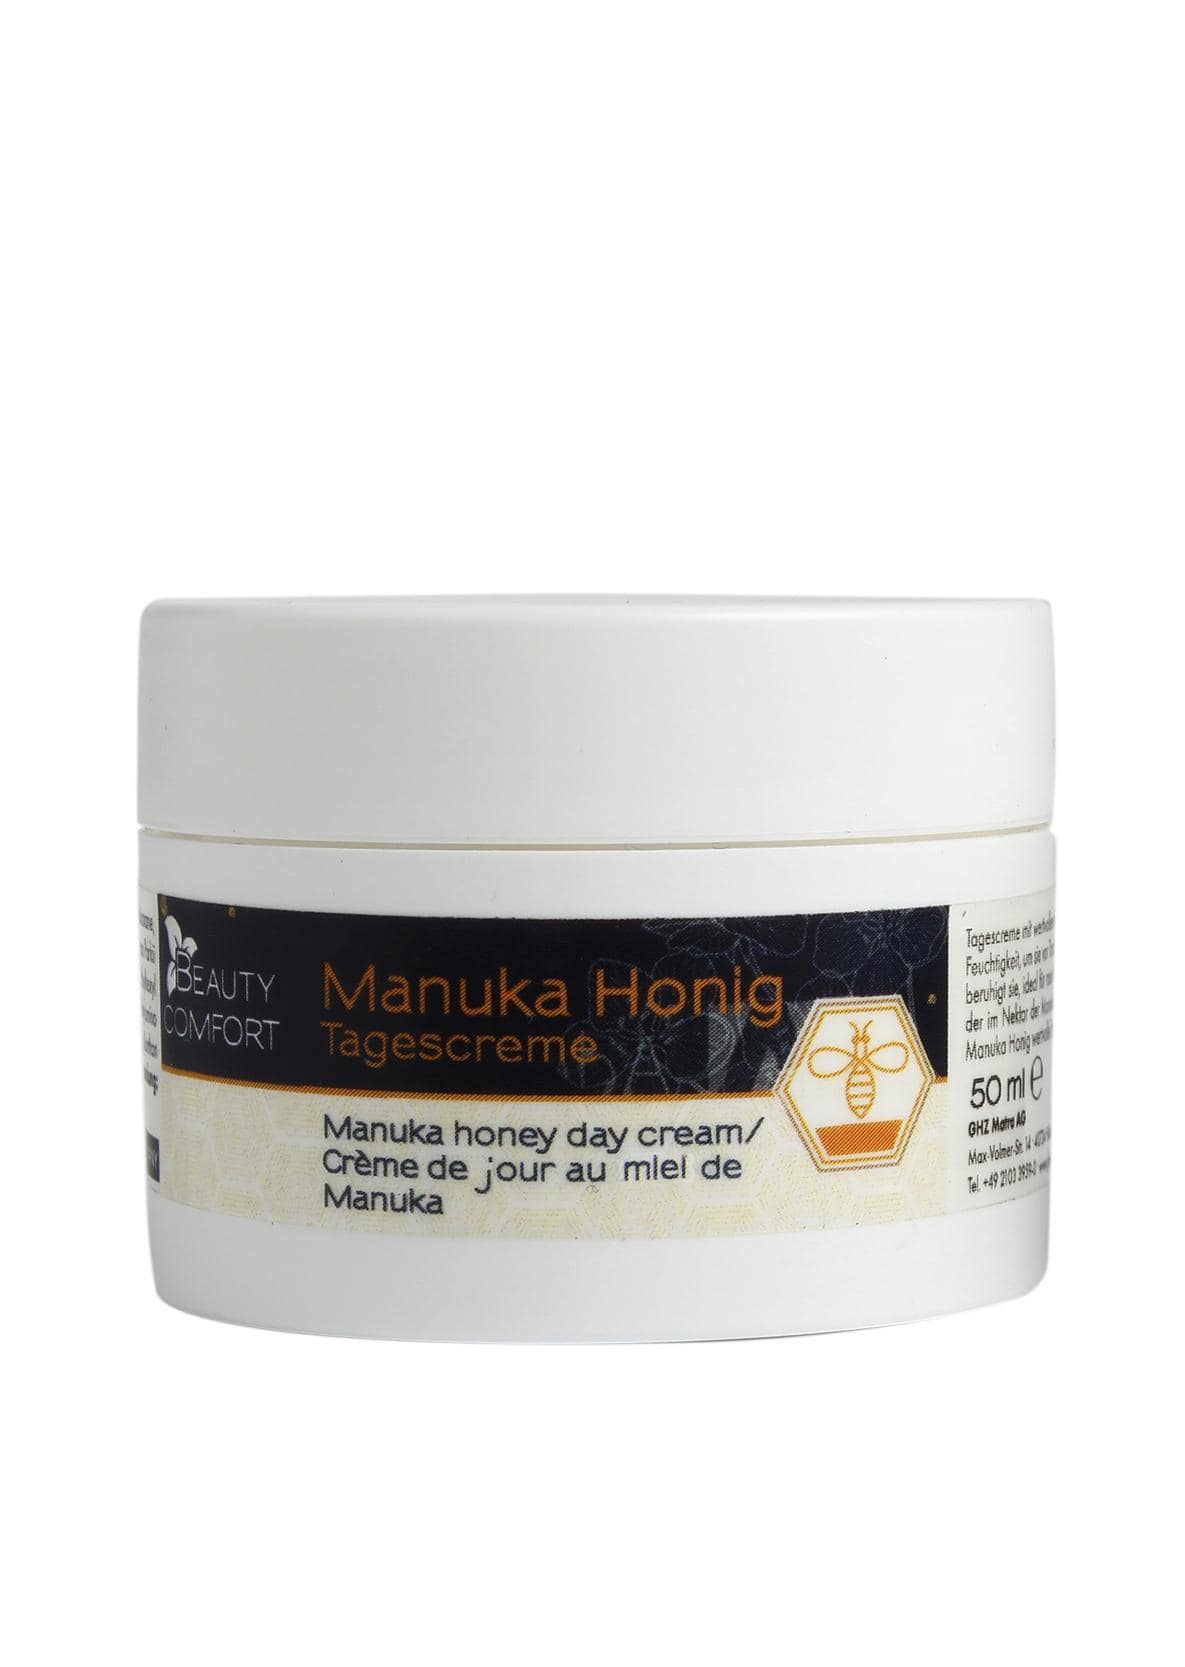 Beauty Comfort Manuka Honig Tagescreme, 50 ml